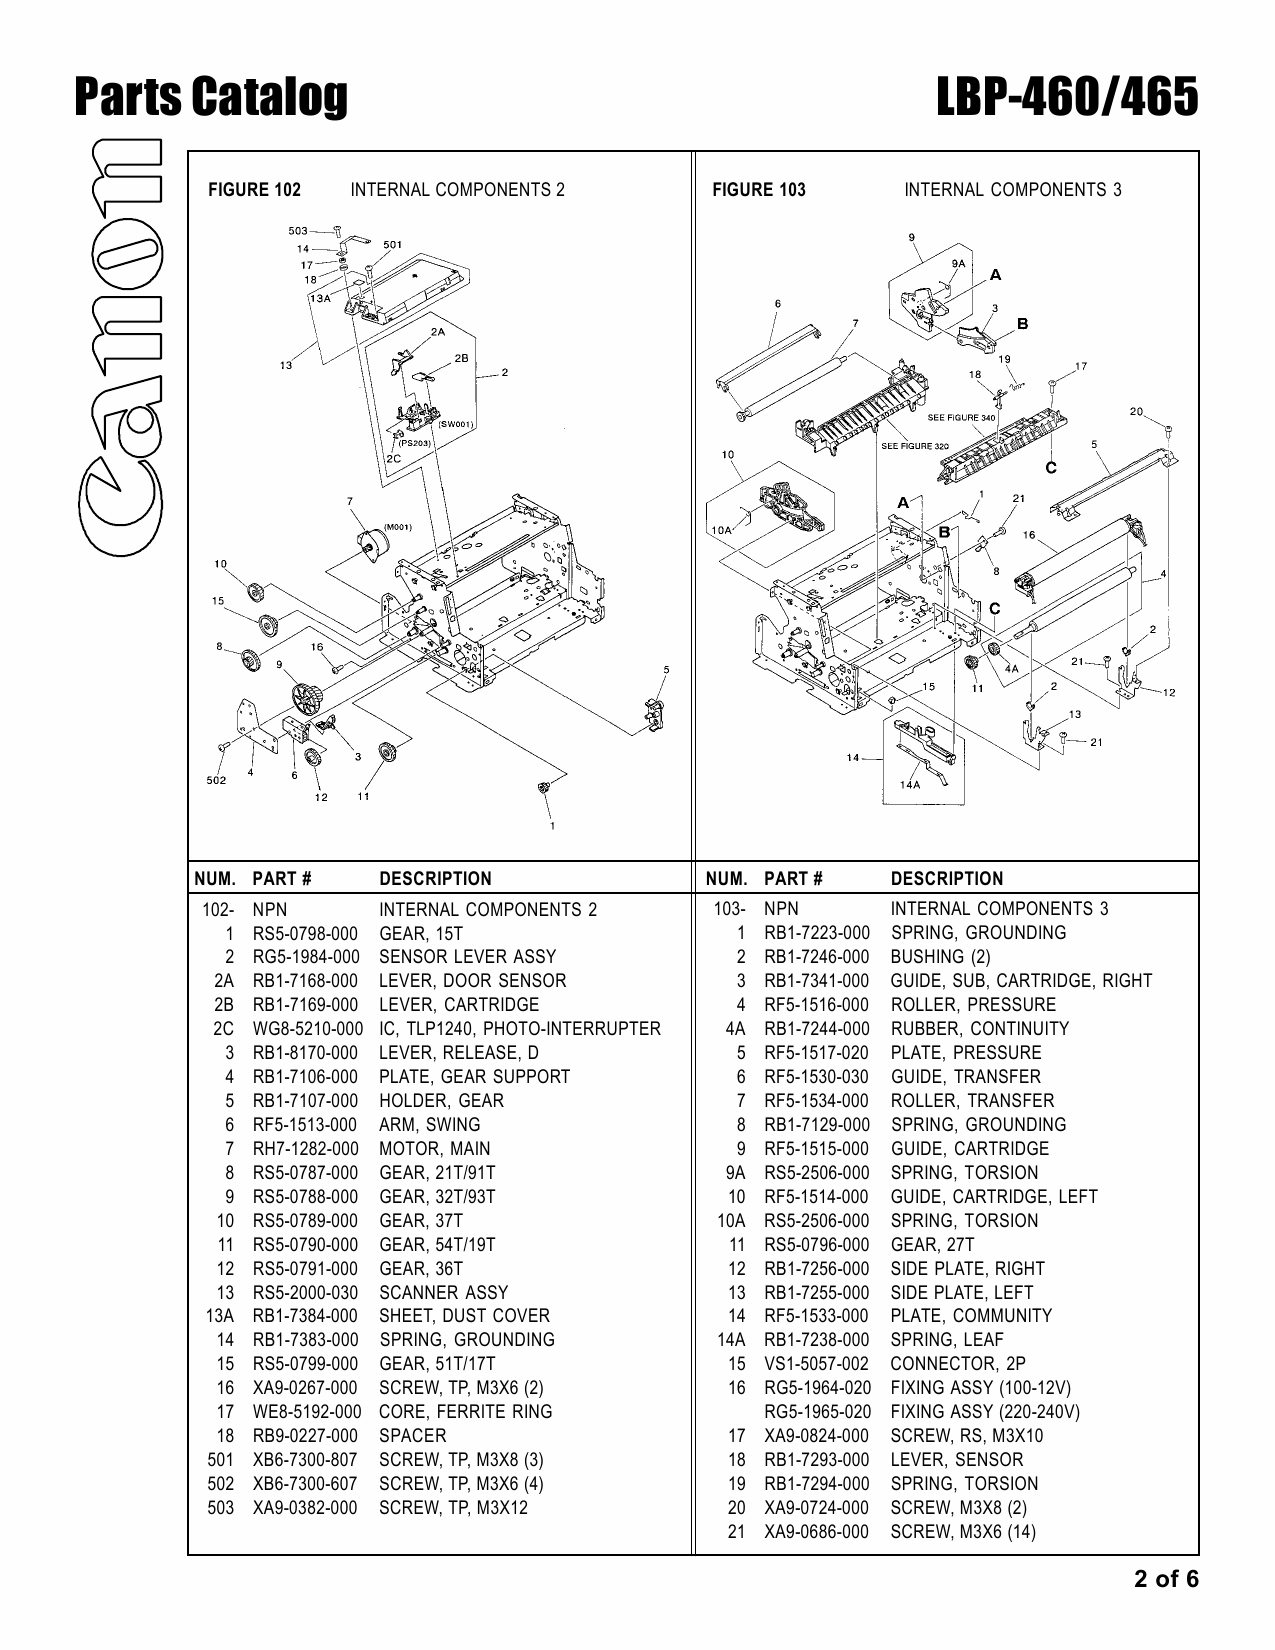 Canon imageCLASS LBP-460 465 Parts Catalog Manual-2